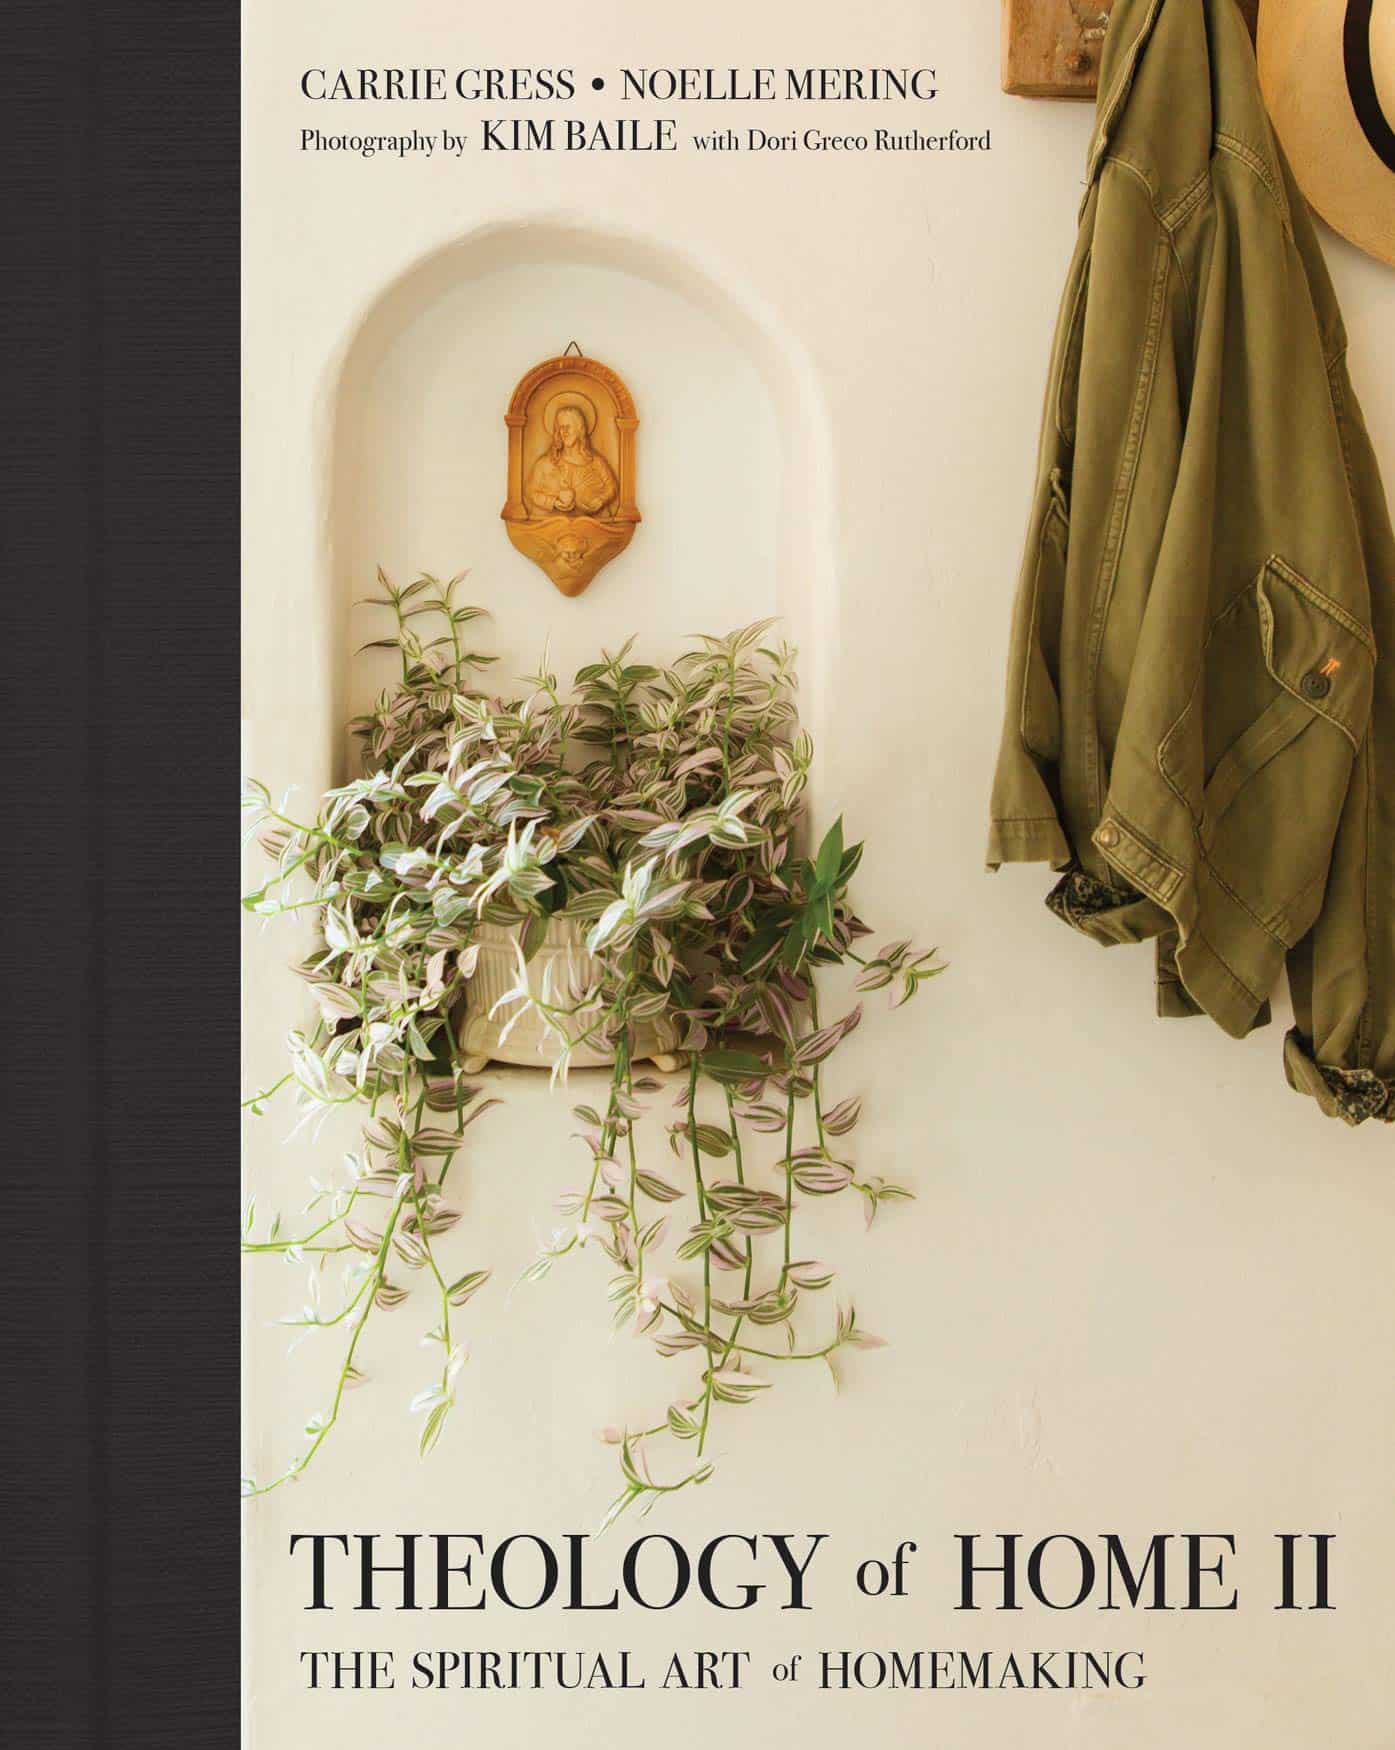 The theology of home, un libro de espiritualidad de lo cotidiano en casa